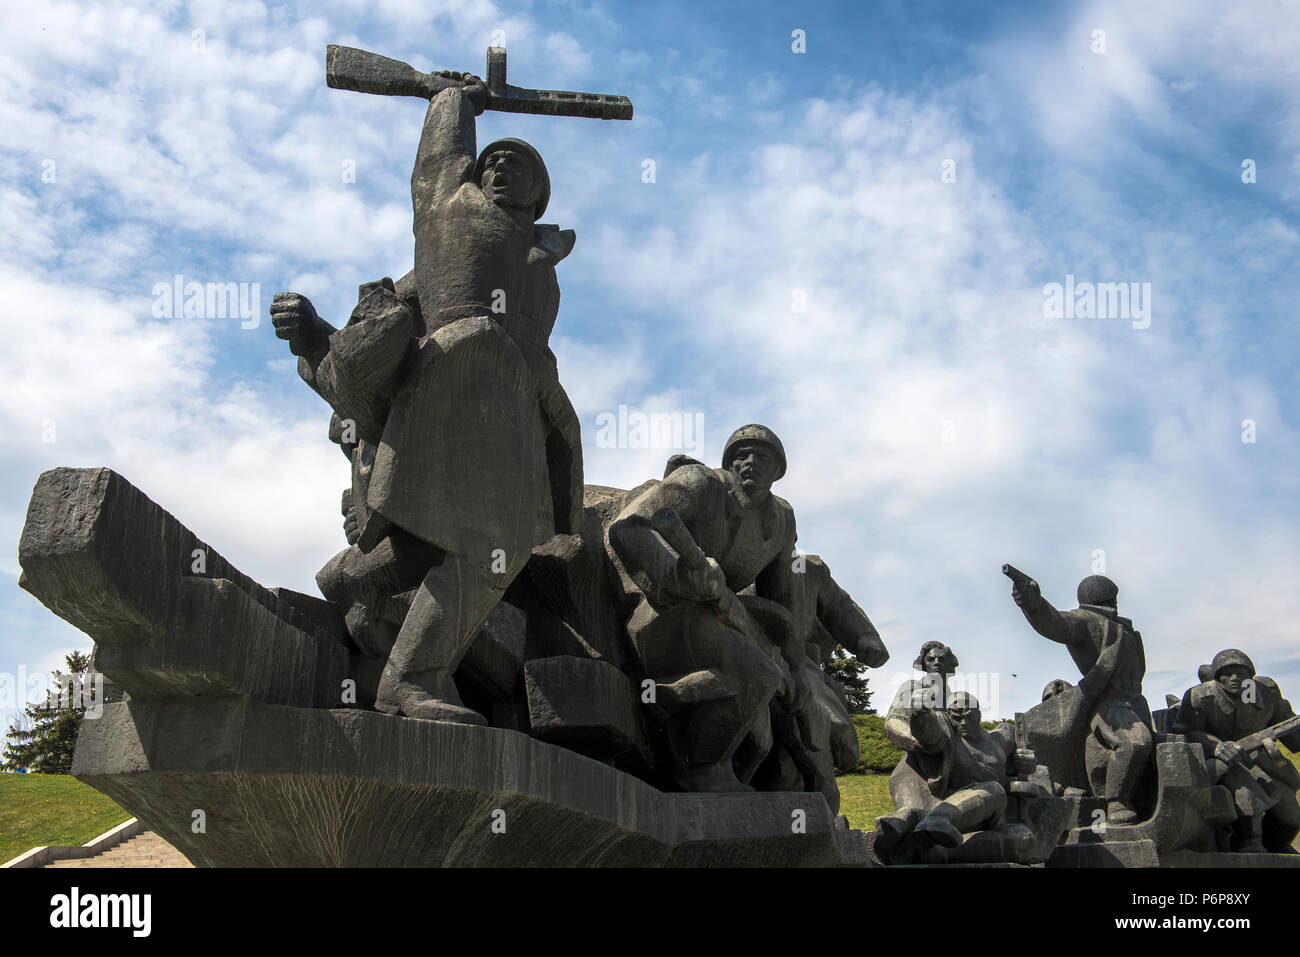 Rodina Mat 'socialist realist' statues, Kiev.  Ukraine. Stock Photo